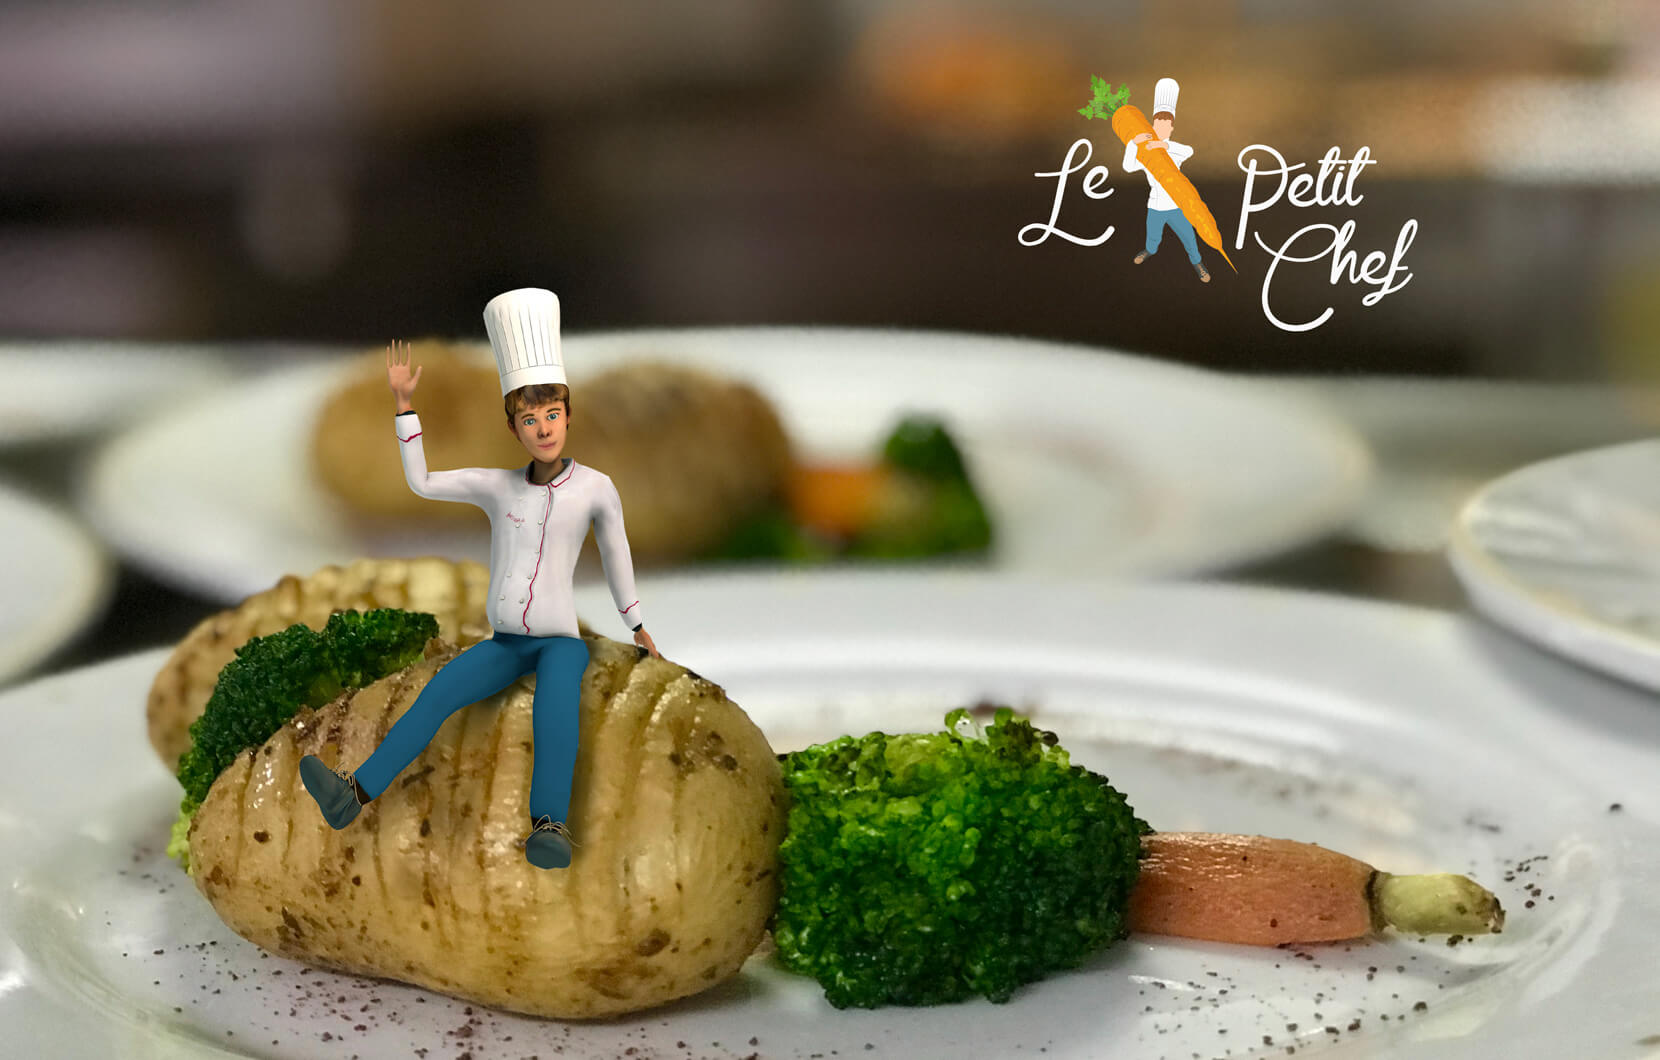 02 Le Petit Chef body